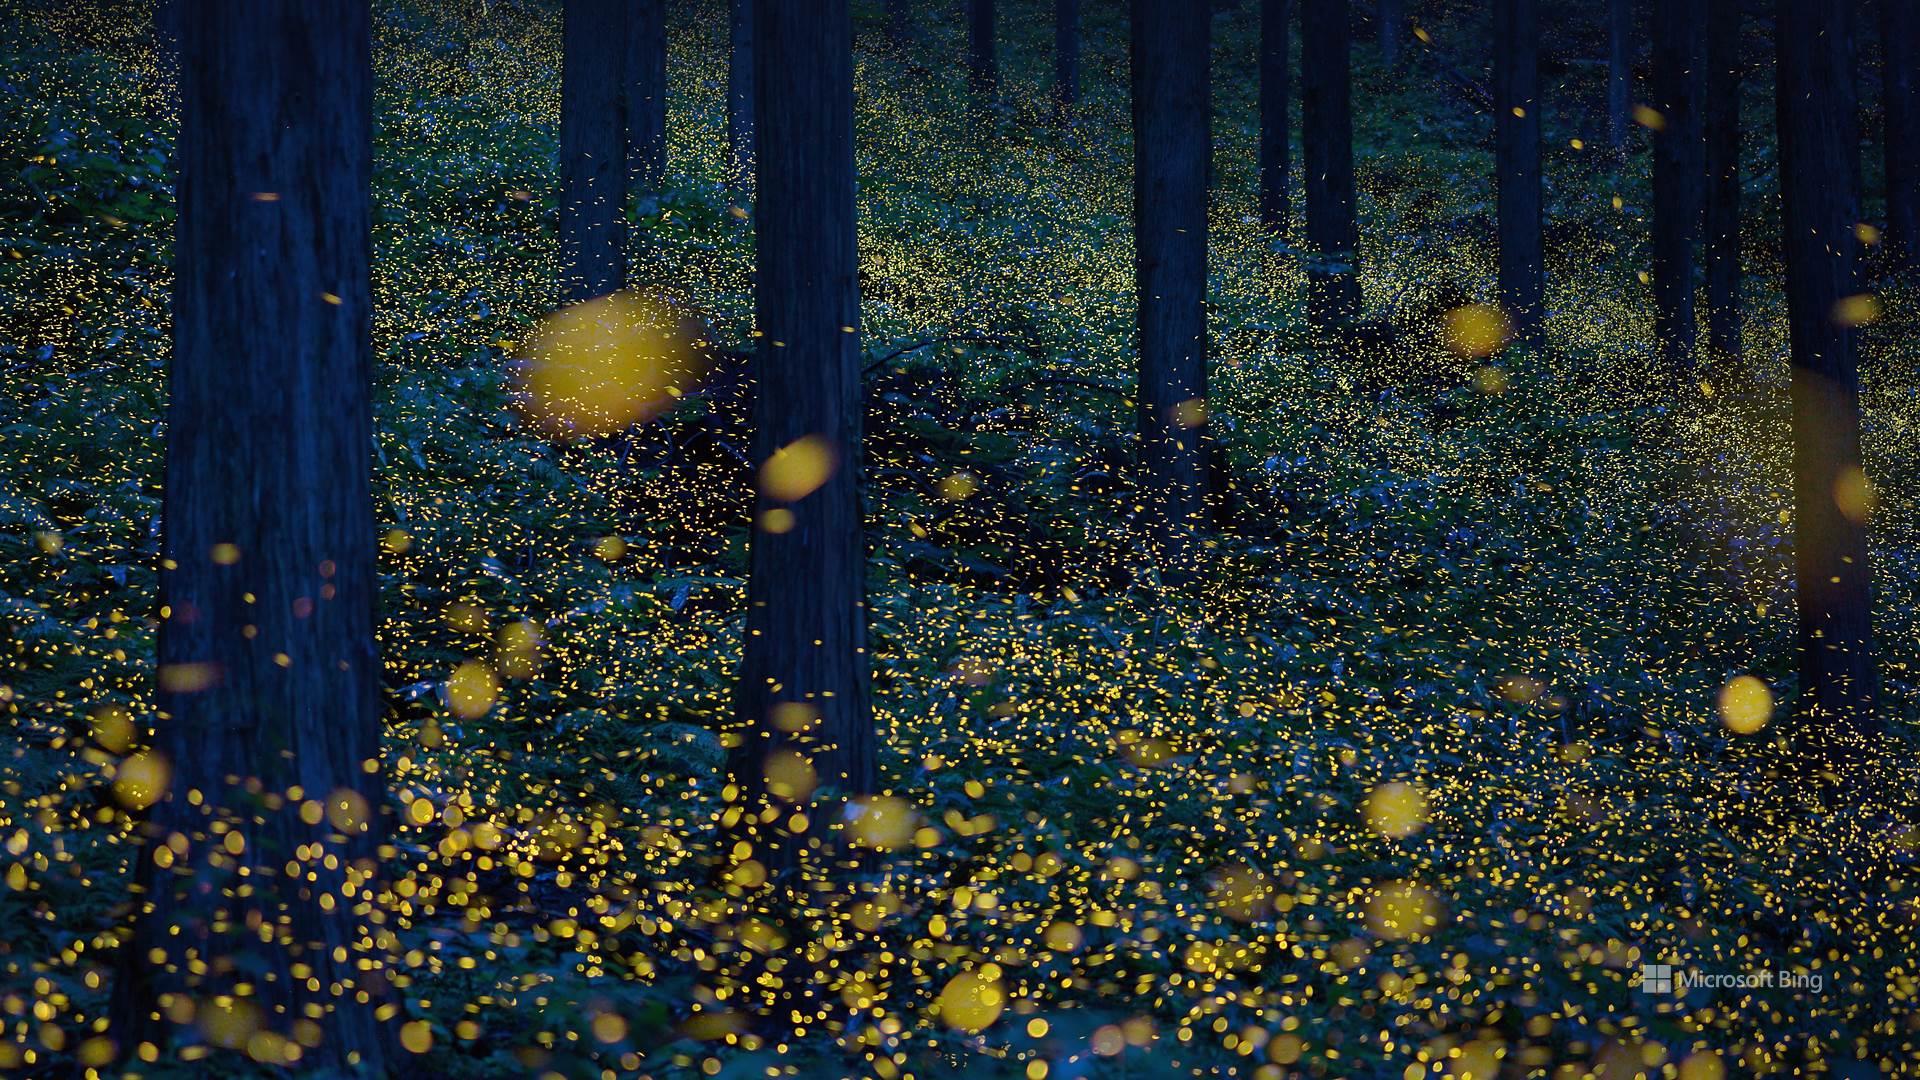 General 1920x1080 animals landscape nature Bing trees fireflies bioluminescence